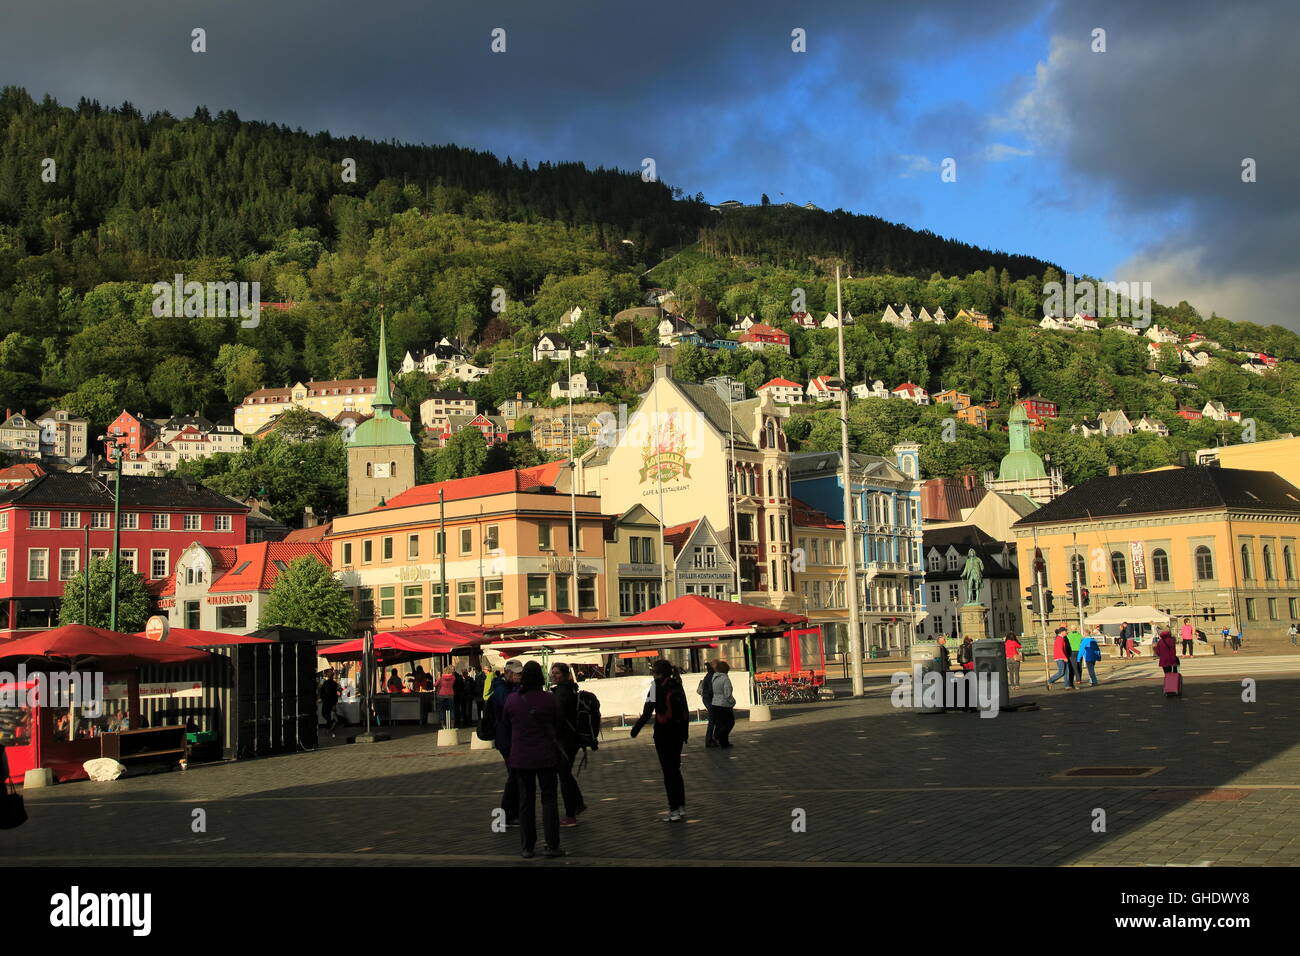 Historic buildings in the Torget market square area of Vågen harbour, Bergen, Norway Stock Photo